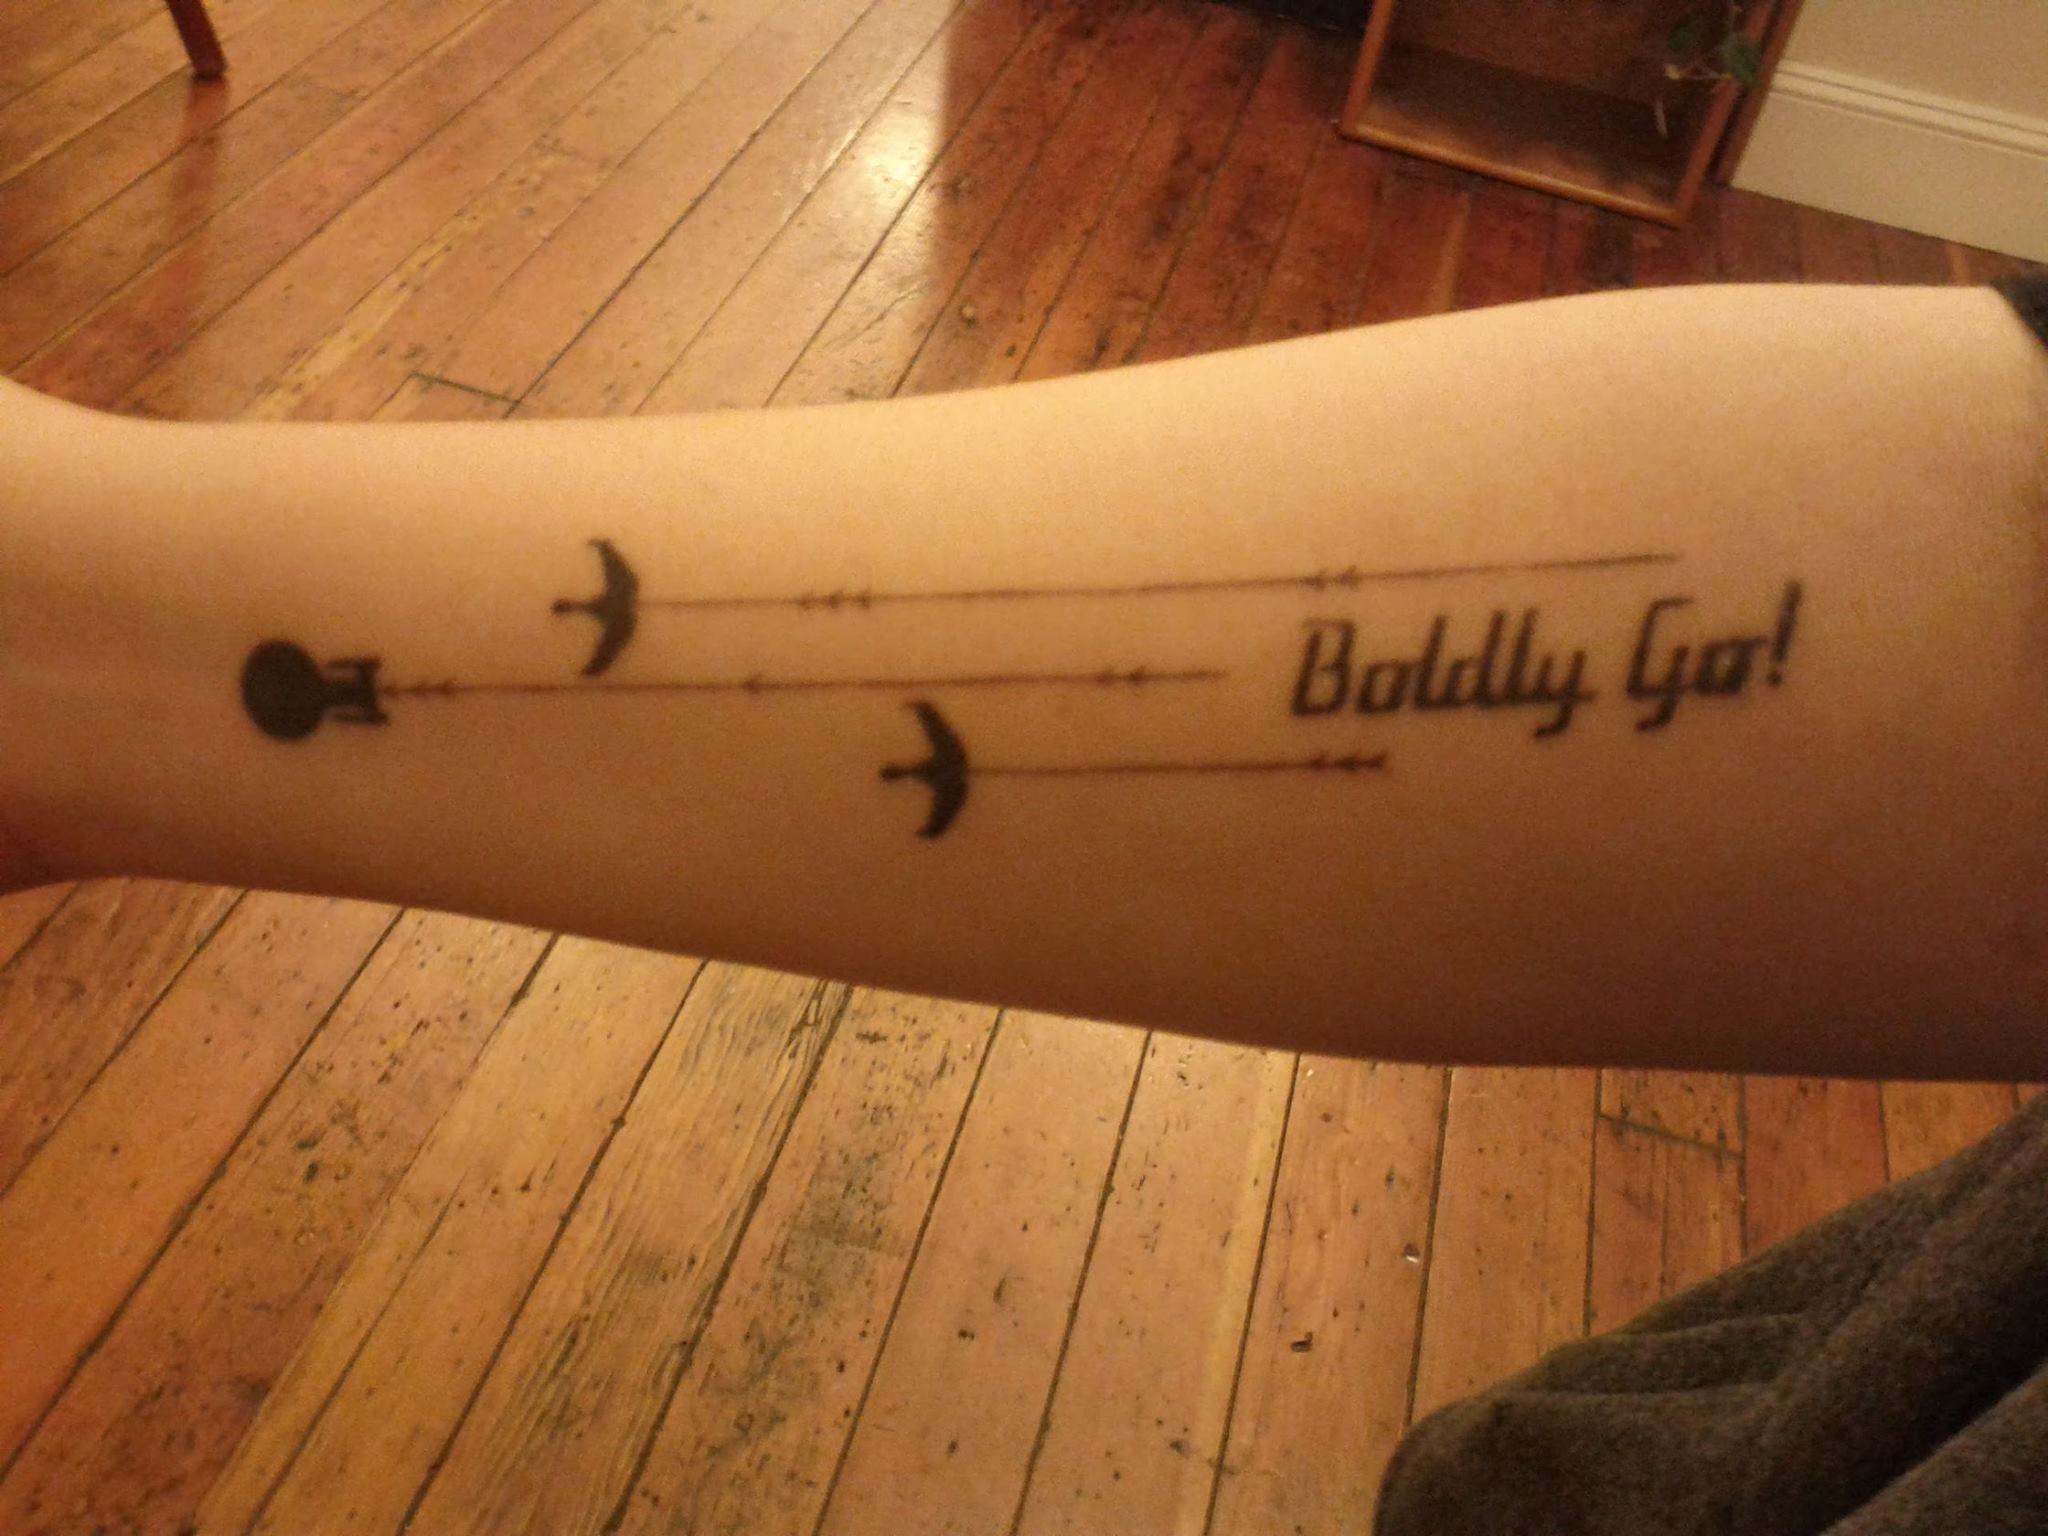 Boldly Go Star Trek Tattoo On Forearm